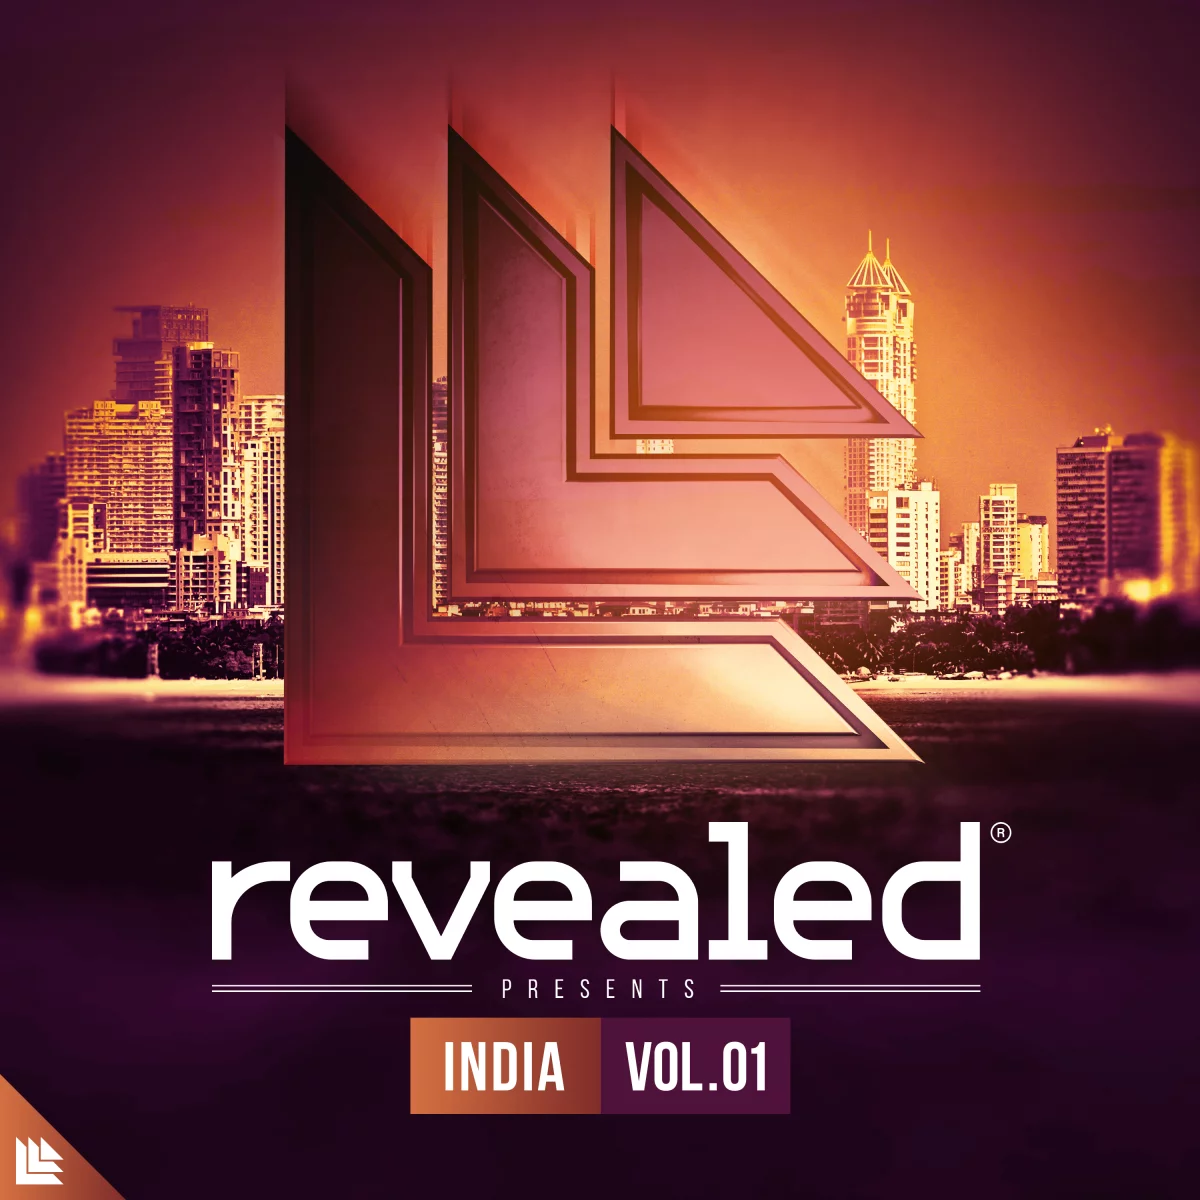 [LIGHT] Revealed India Vol. 1 - revealedrec⁠ 